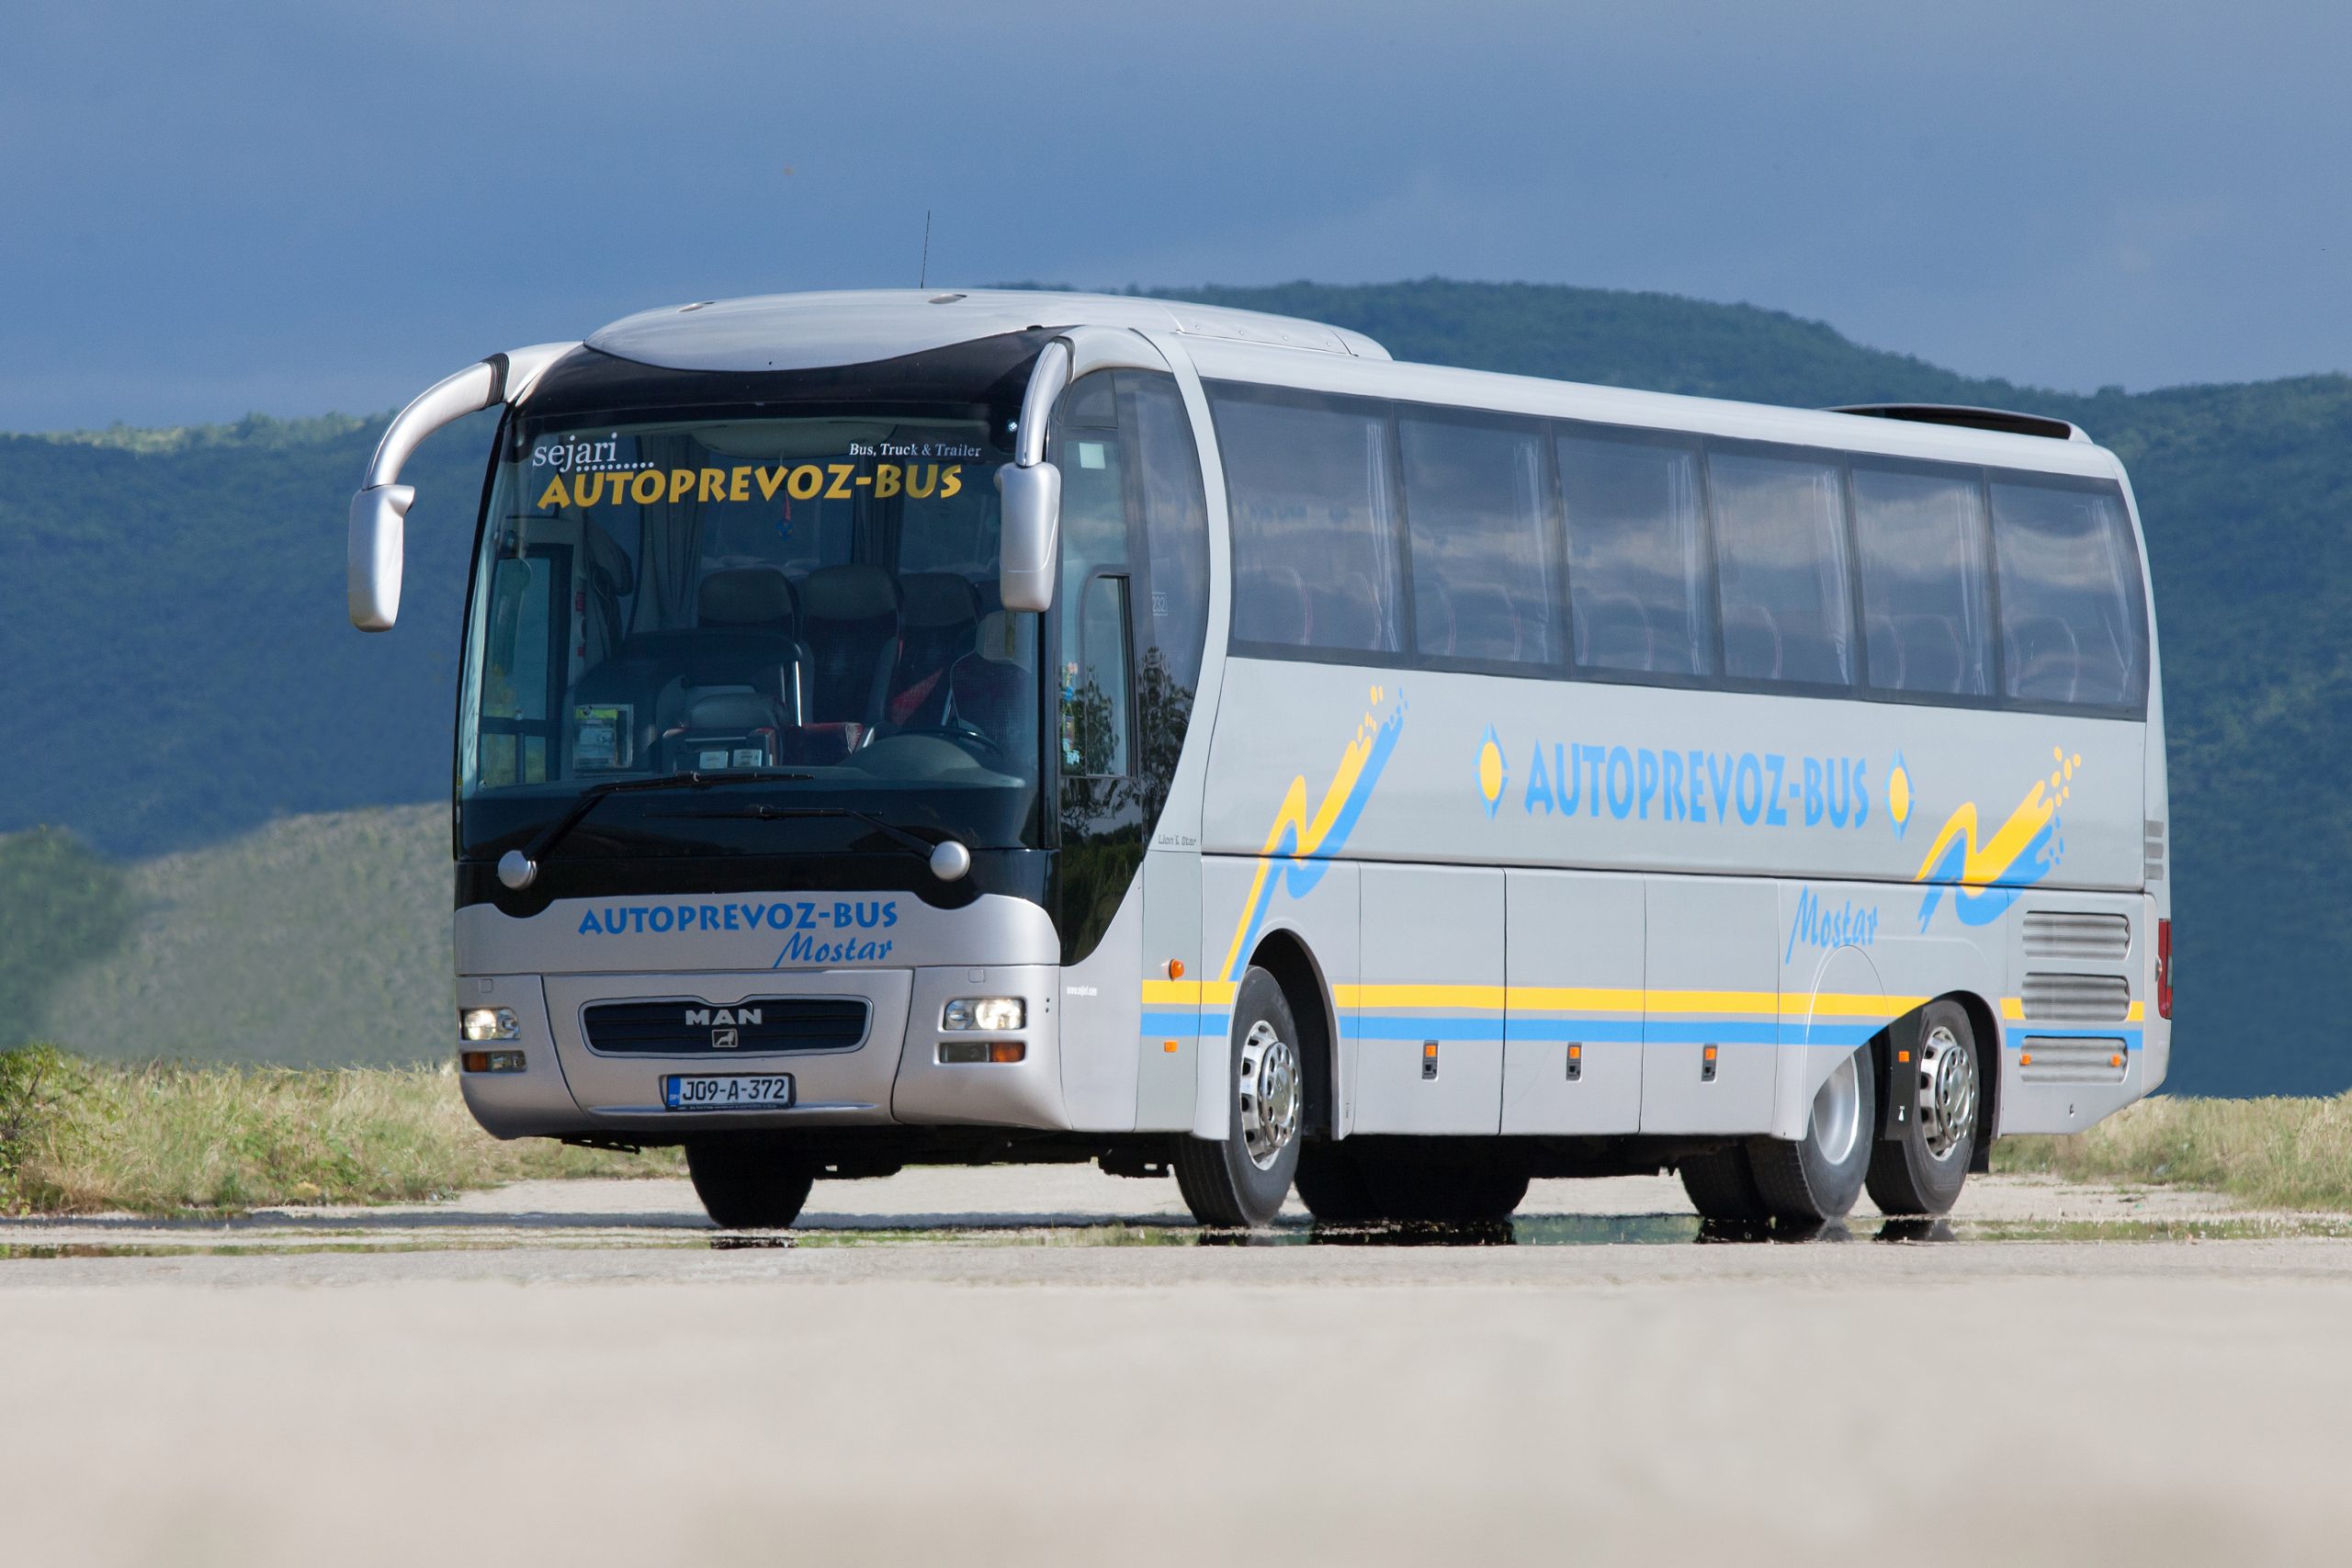 Autoprevoz-bus autobus MAN